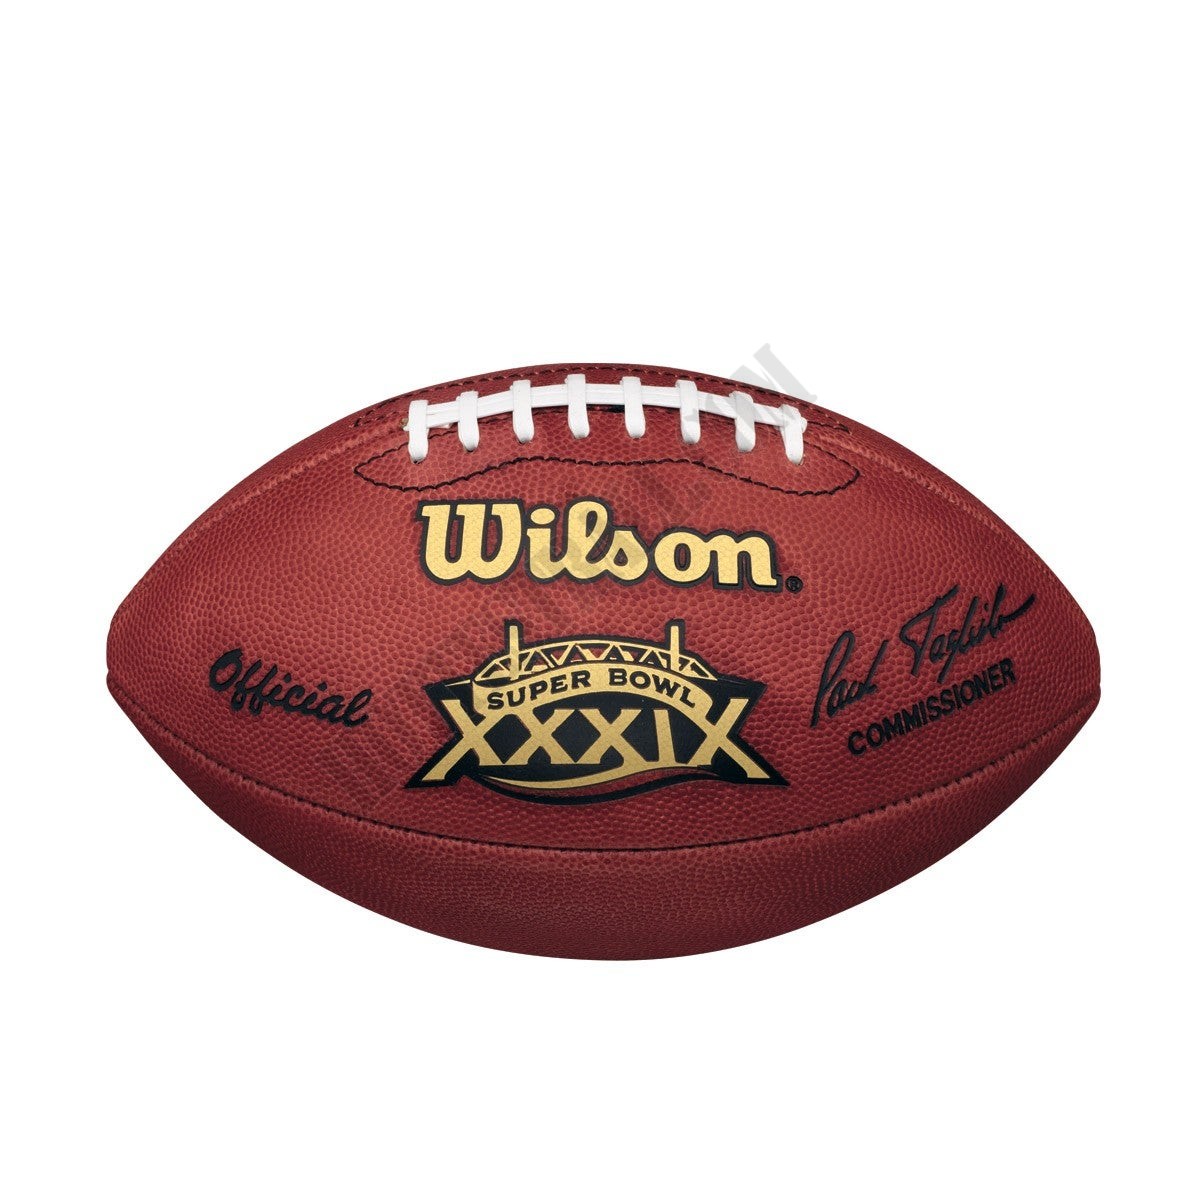 Super Bowl XXXIX Game Football - New England Patriots ● Wilson Promotions - Super Bowl XXXIX Game Football - New England Patriots ● Wilson Promotions